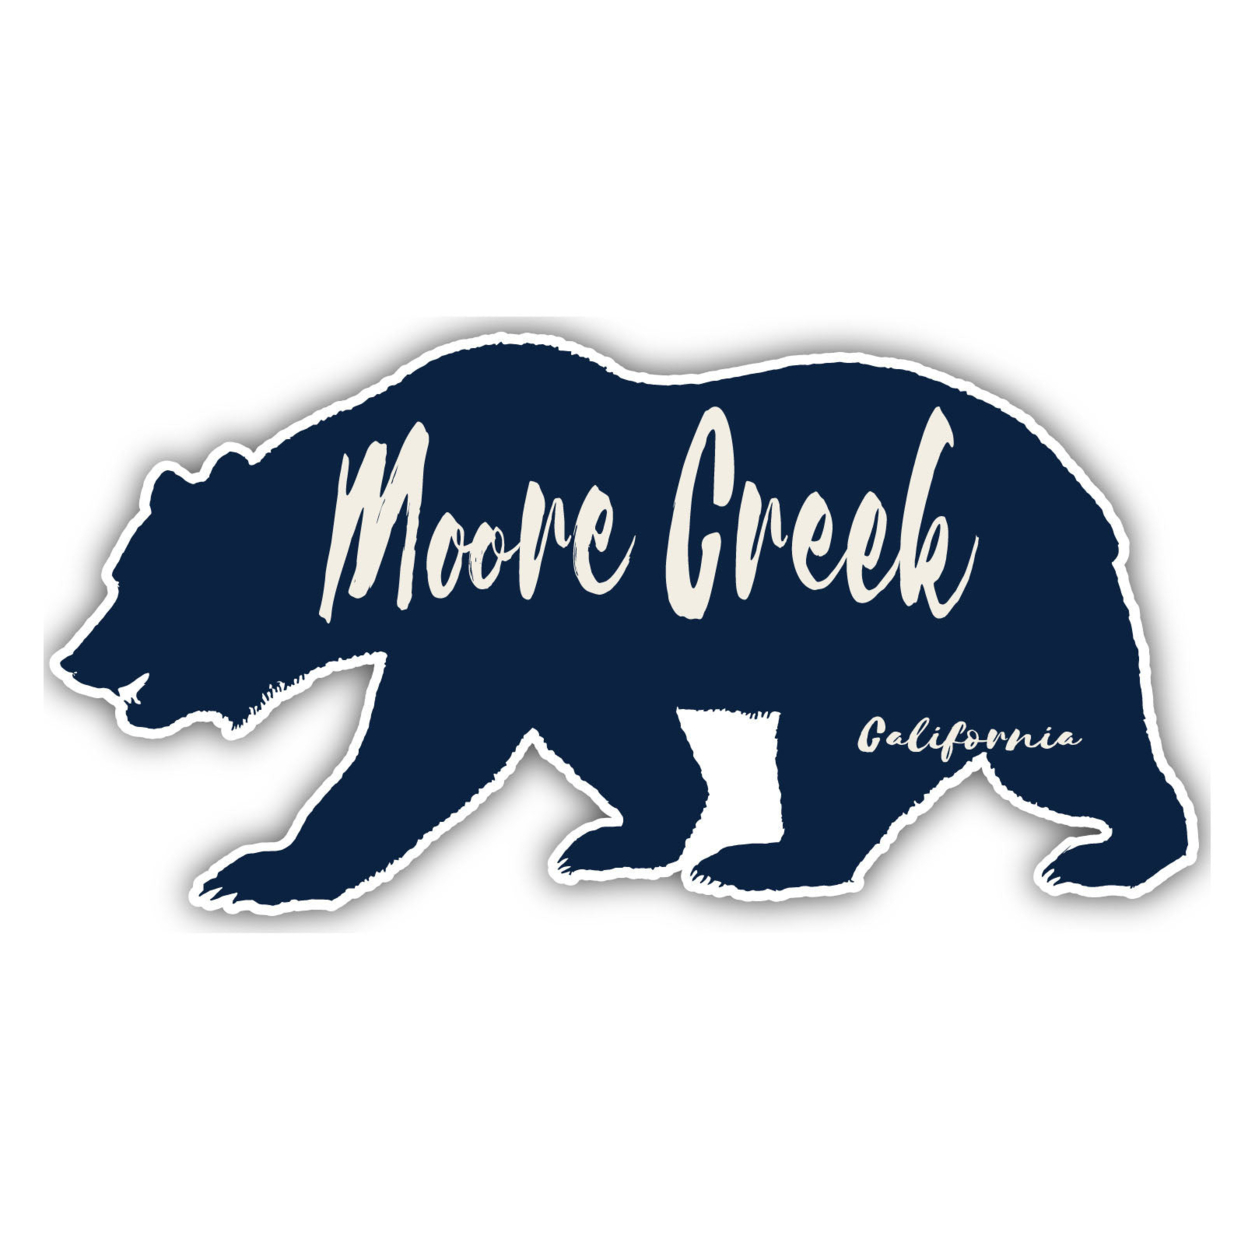 Moore Creek California Souvenir Decorative Stickers (Choose Theme And Size) - Single Unit, 4-Inch, Bear